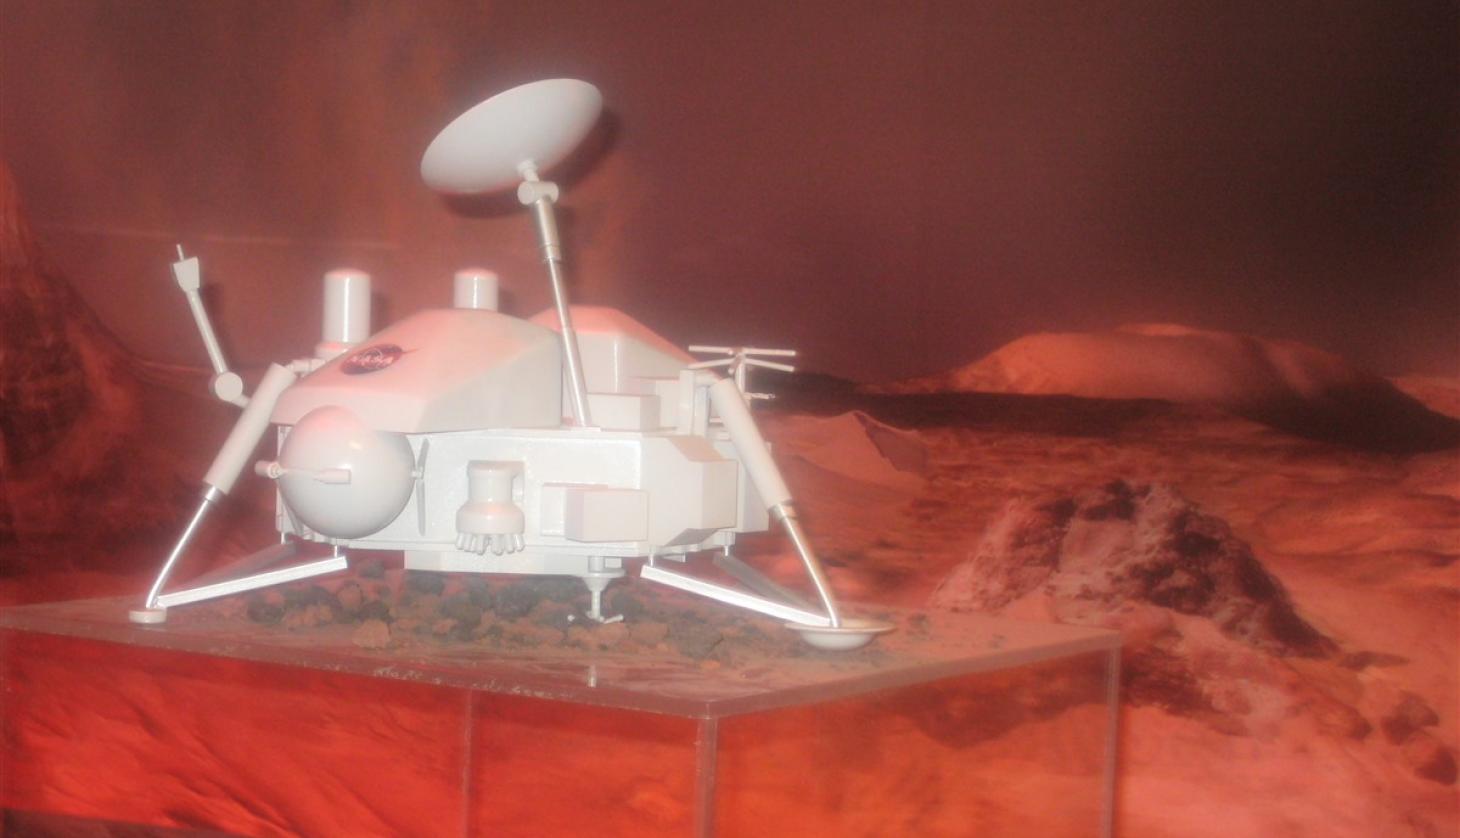 Space Probe Model on Mars